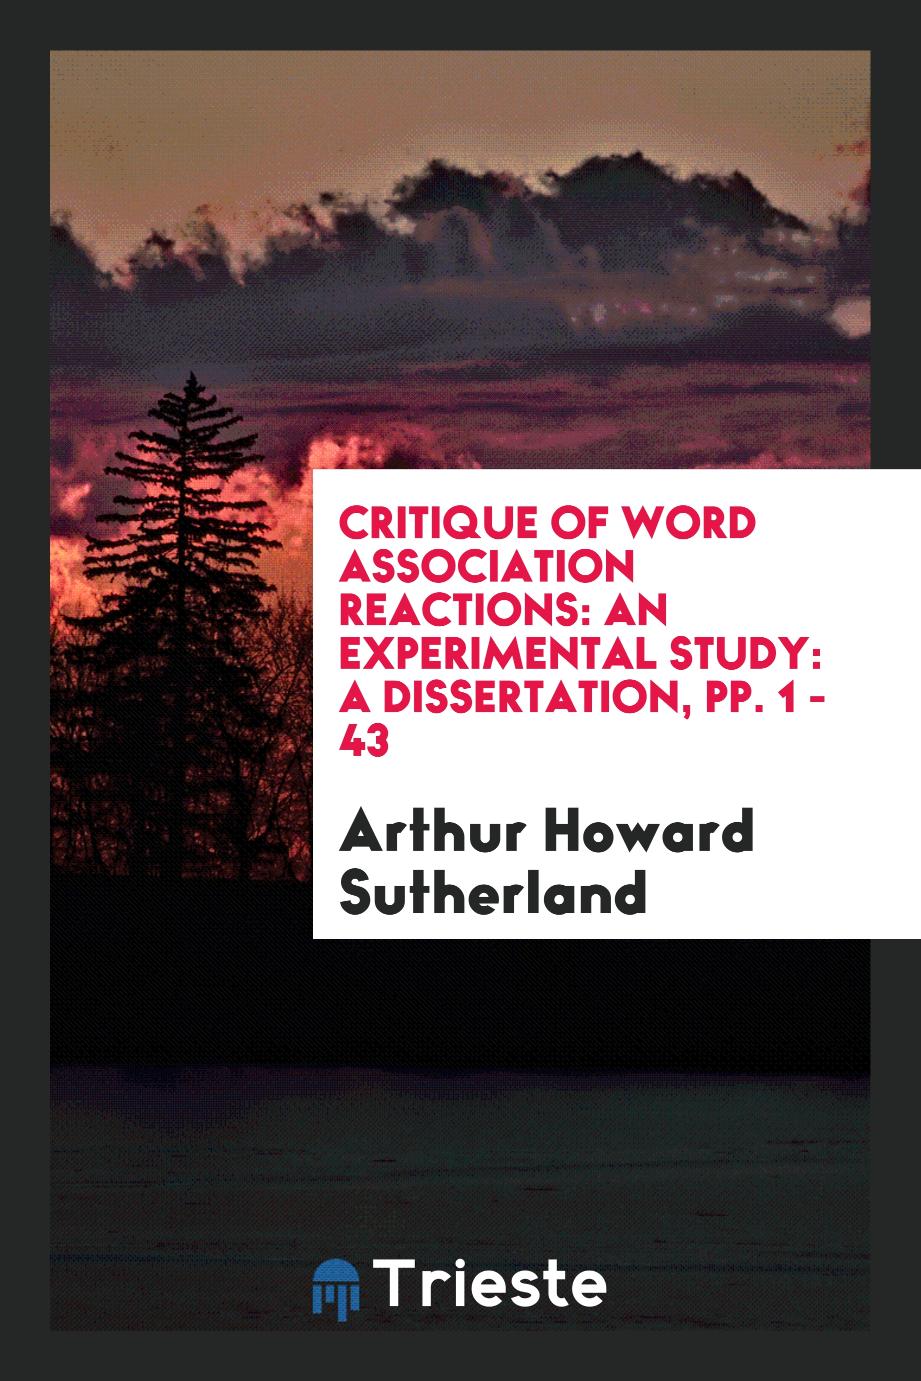 Critique of Word Association Reactions: An Experimental Study: a dissertation, pp. 1 - 43